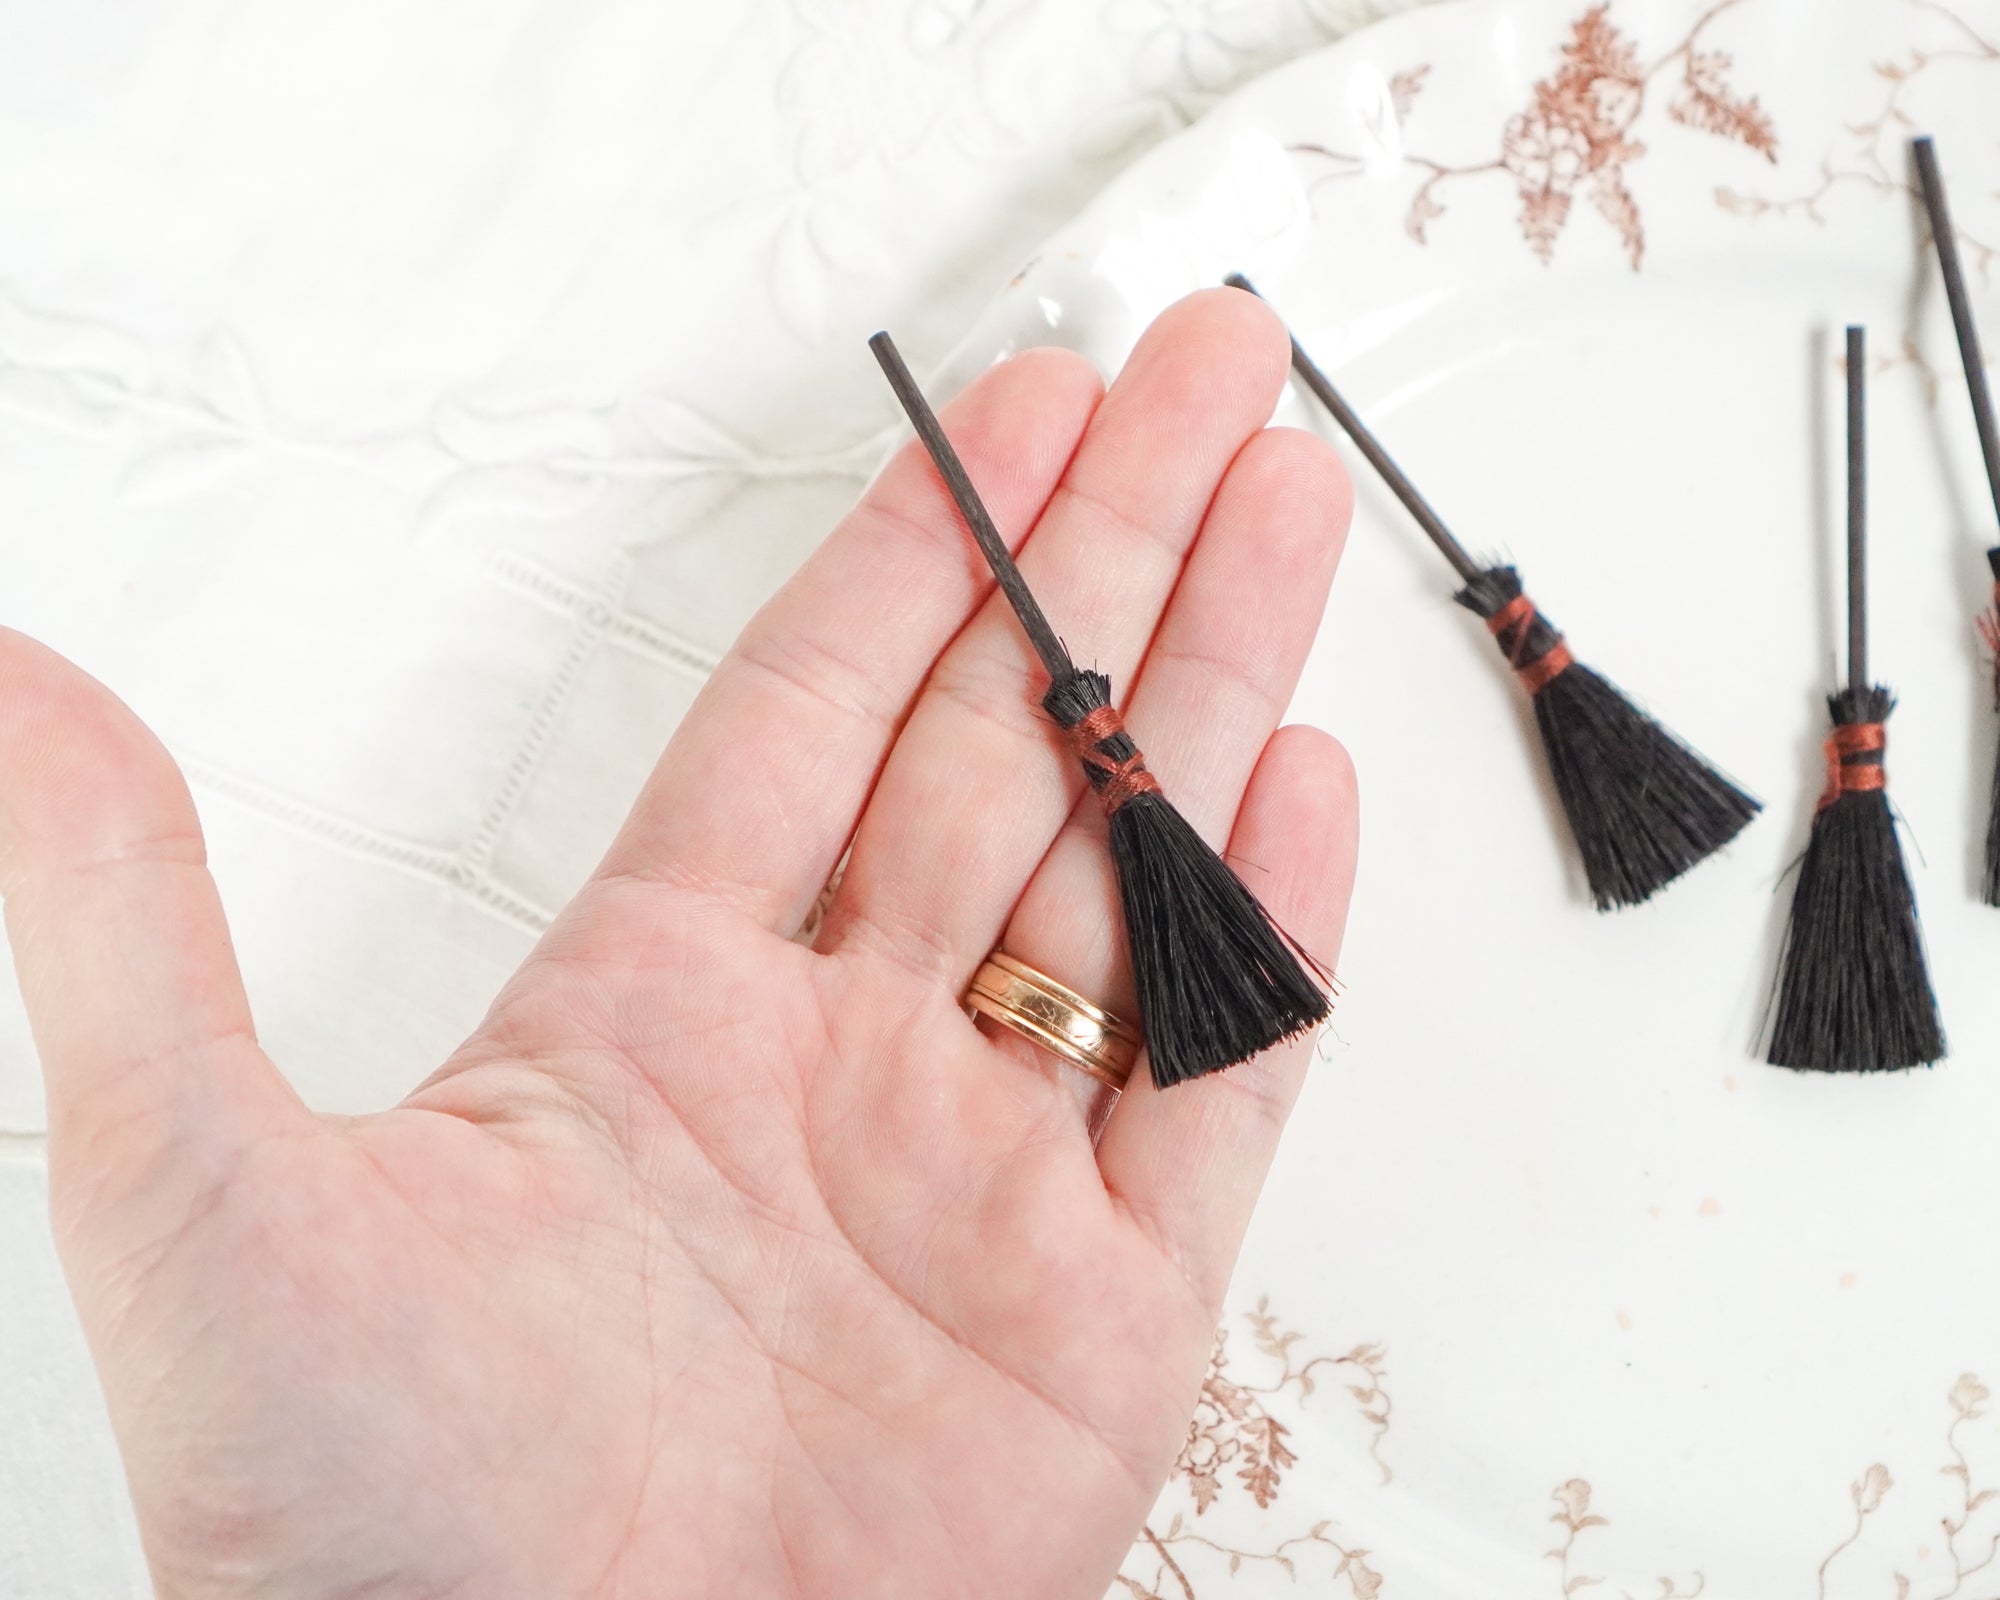 Miniature Witch Brooms - 4 Small Black Sisal Mini Halloween Hearth Brooms